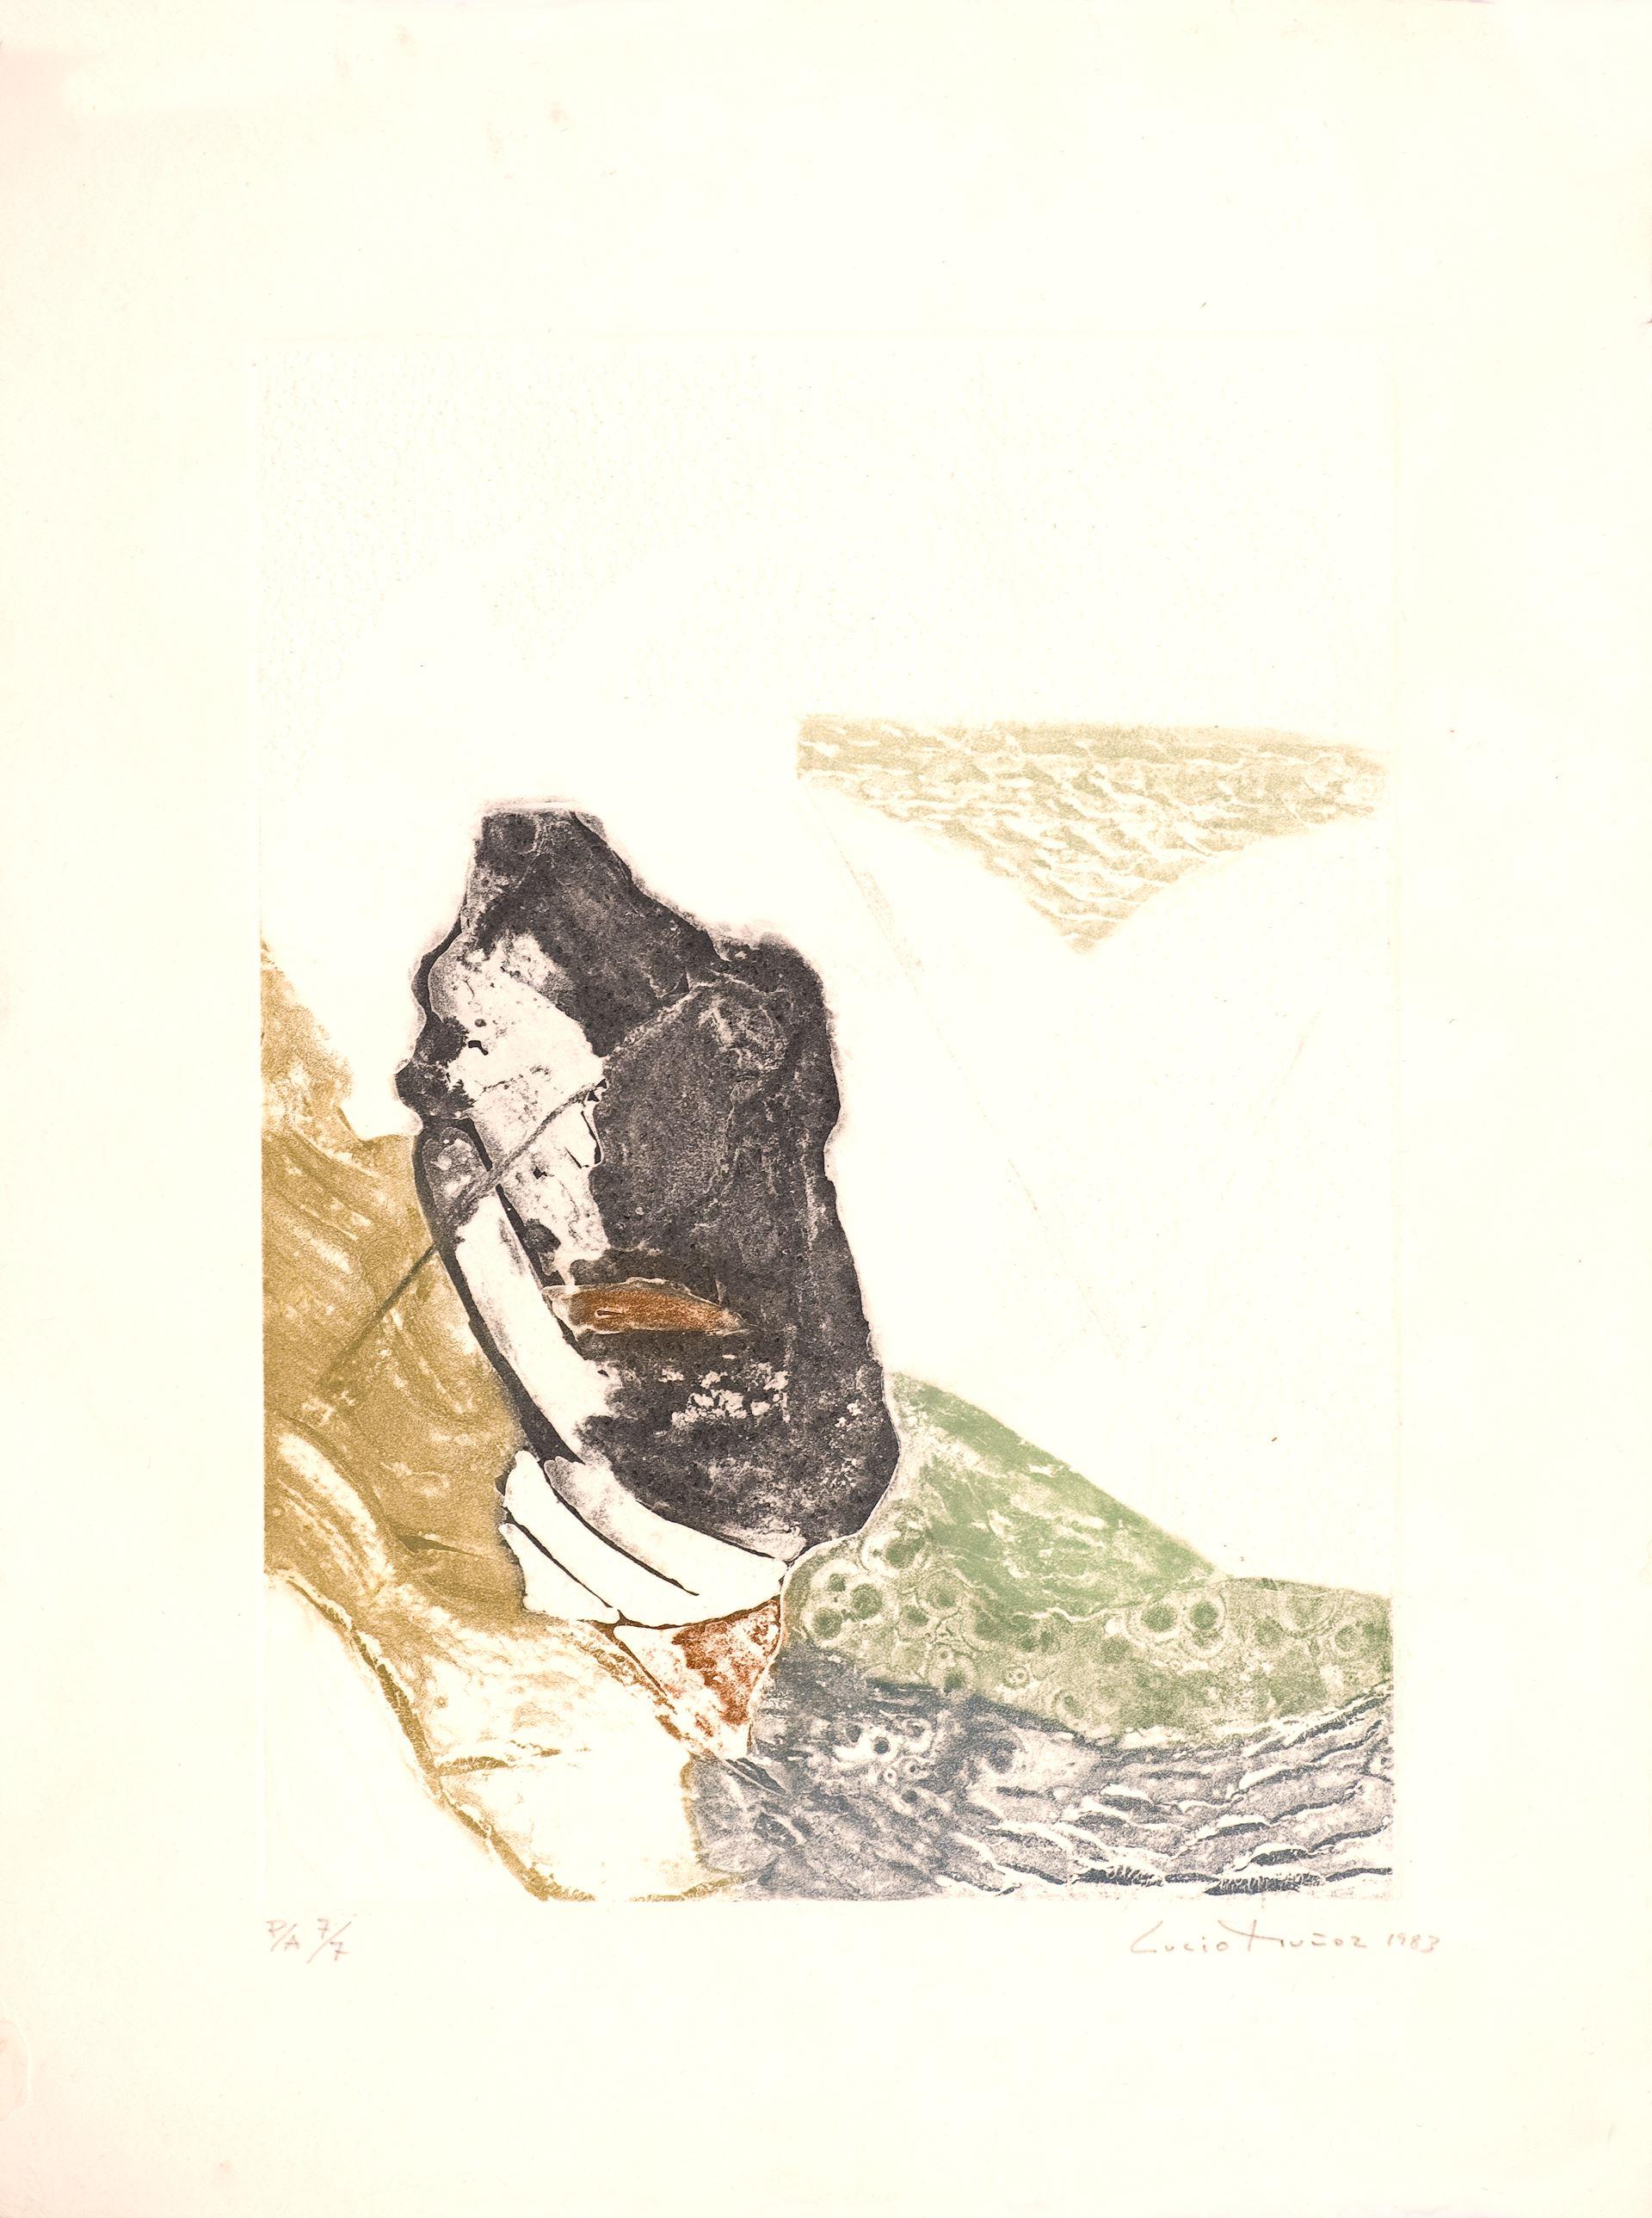 Lucio Muñoz Martinez (Spain, 1929-1998)
'Discurso para navegantes I', 1983
engraving on paper
18.2 x 13 in. (46 x 33 cm.)
ID: MUÑ1114-011-007
Hand-signed by author